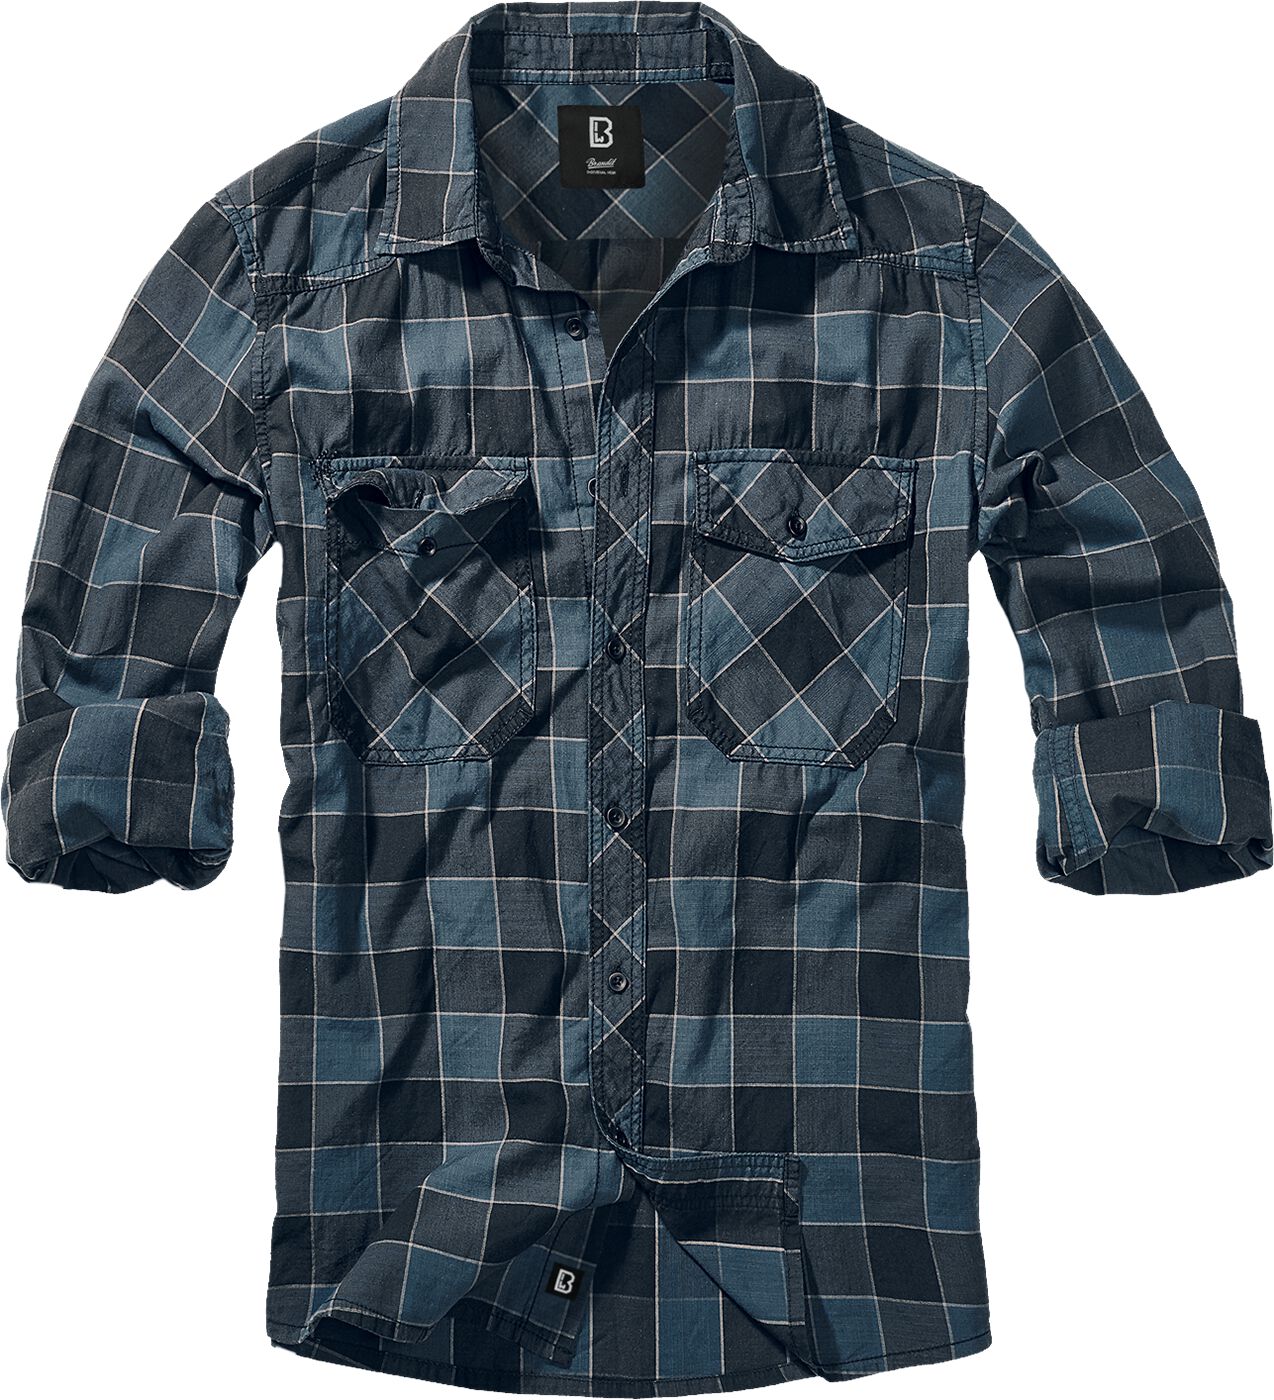 Brandit Checkshirt Langarmhemd blau grau schwarz in L